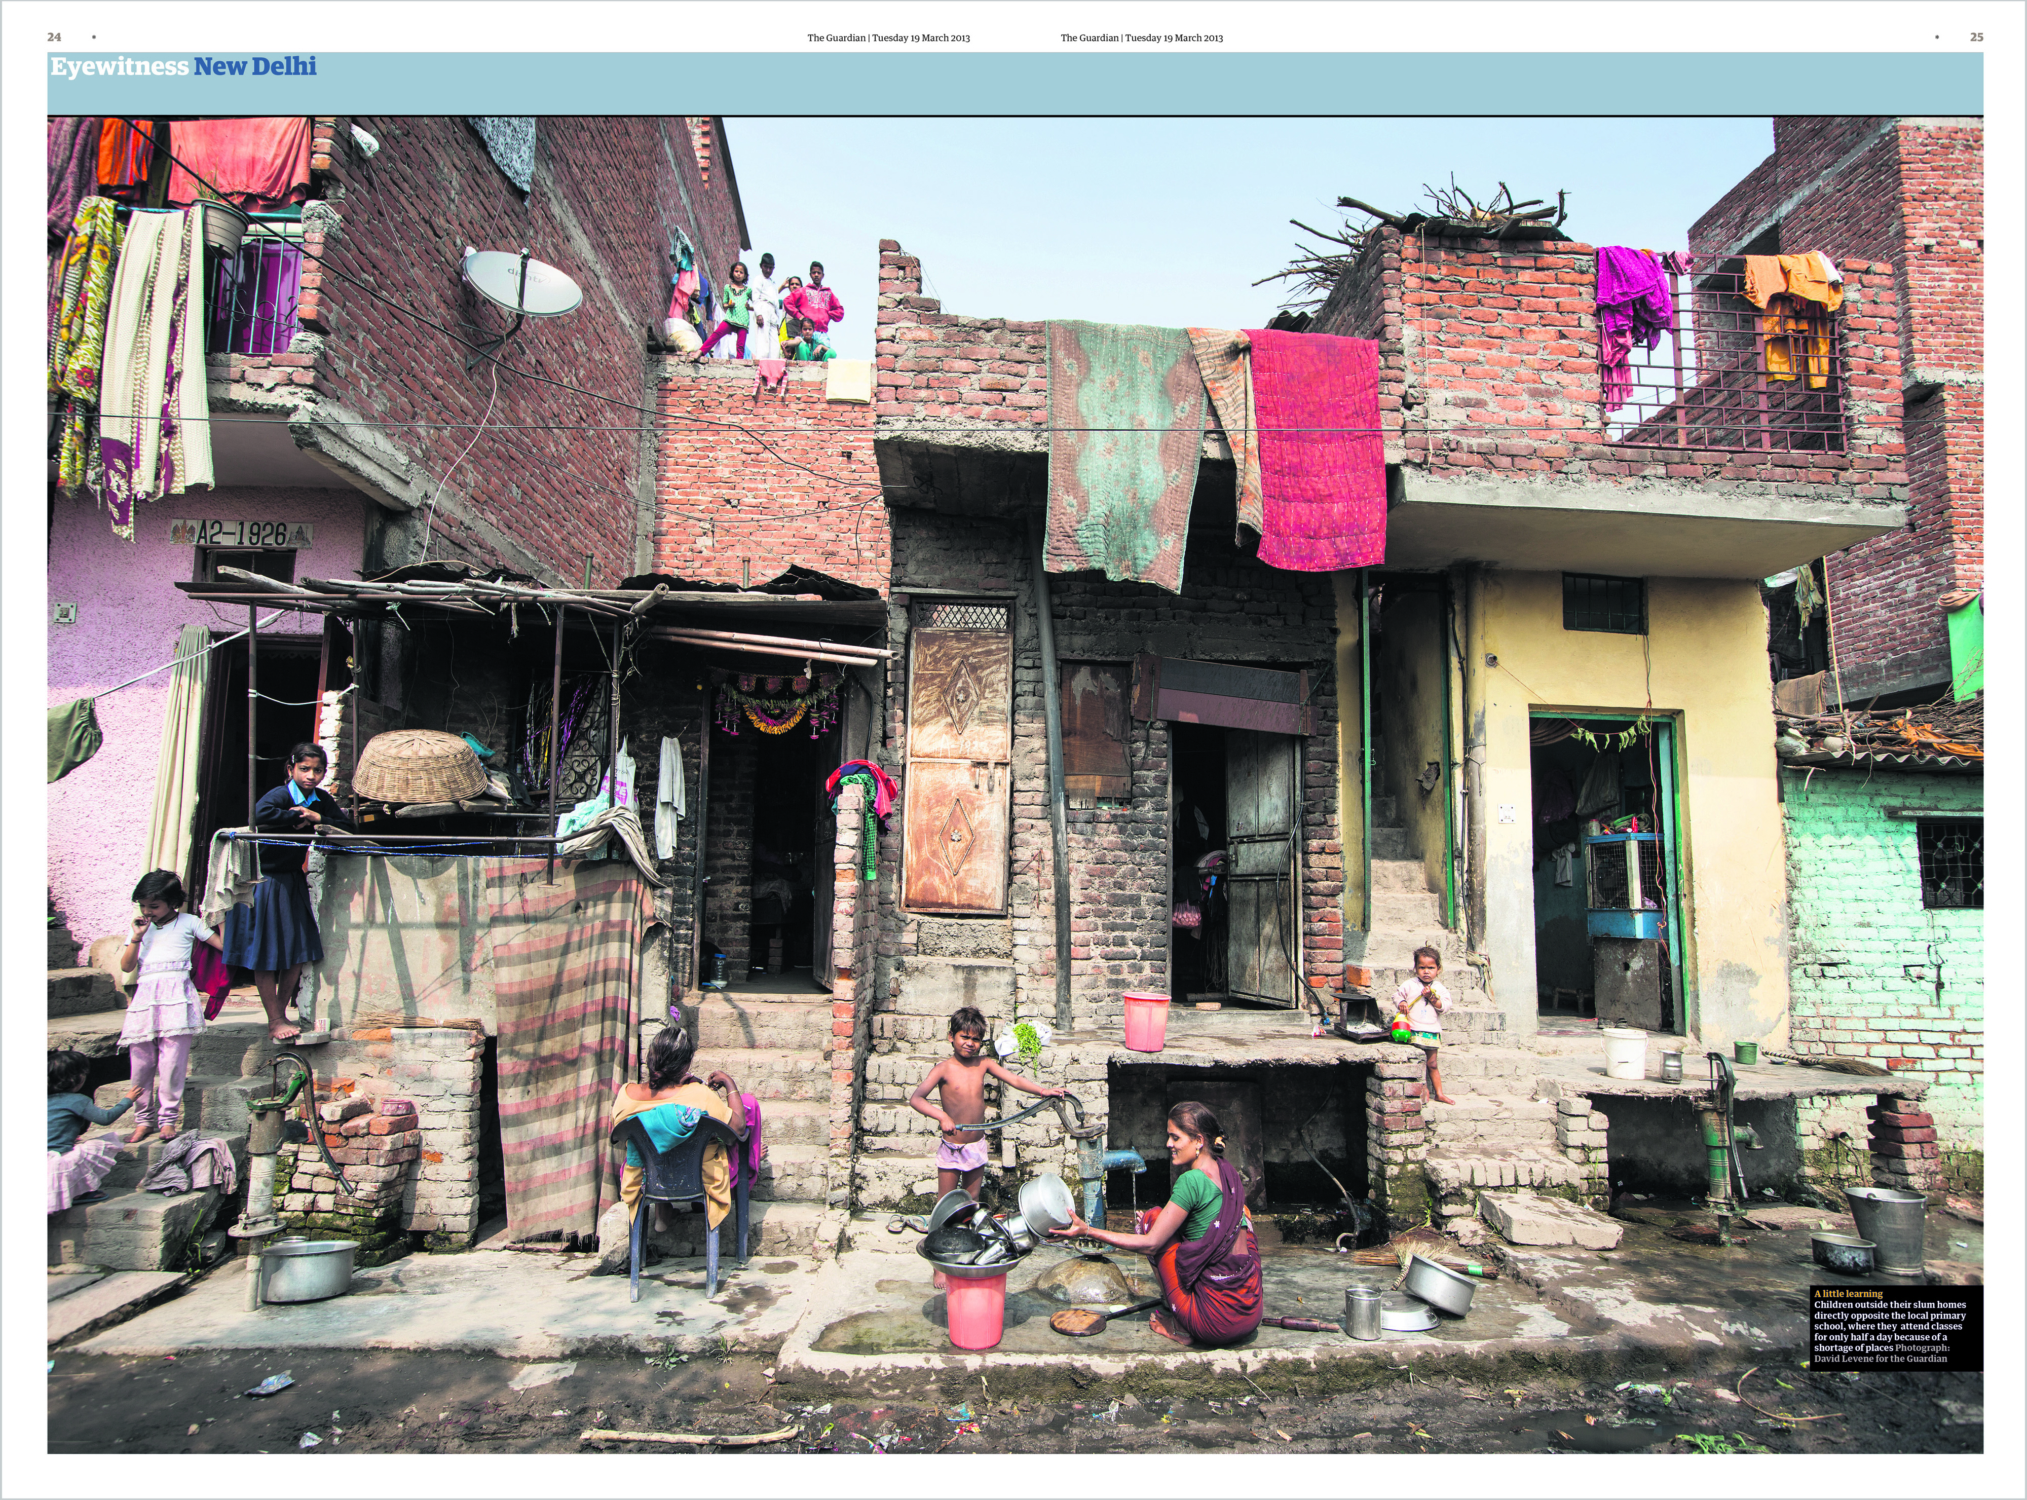 New Delhi Slums, David Levene Photography